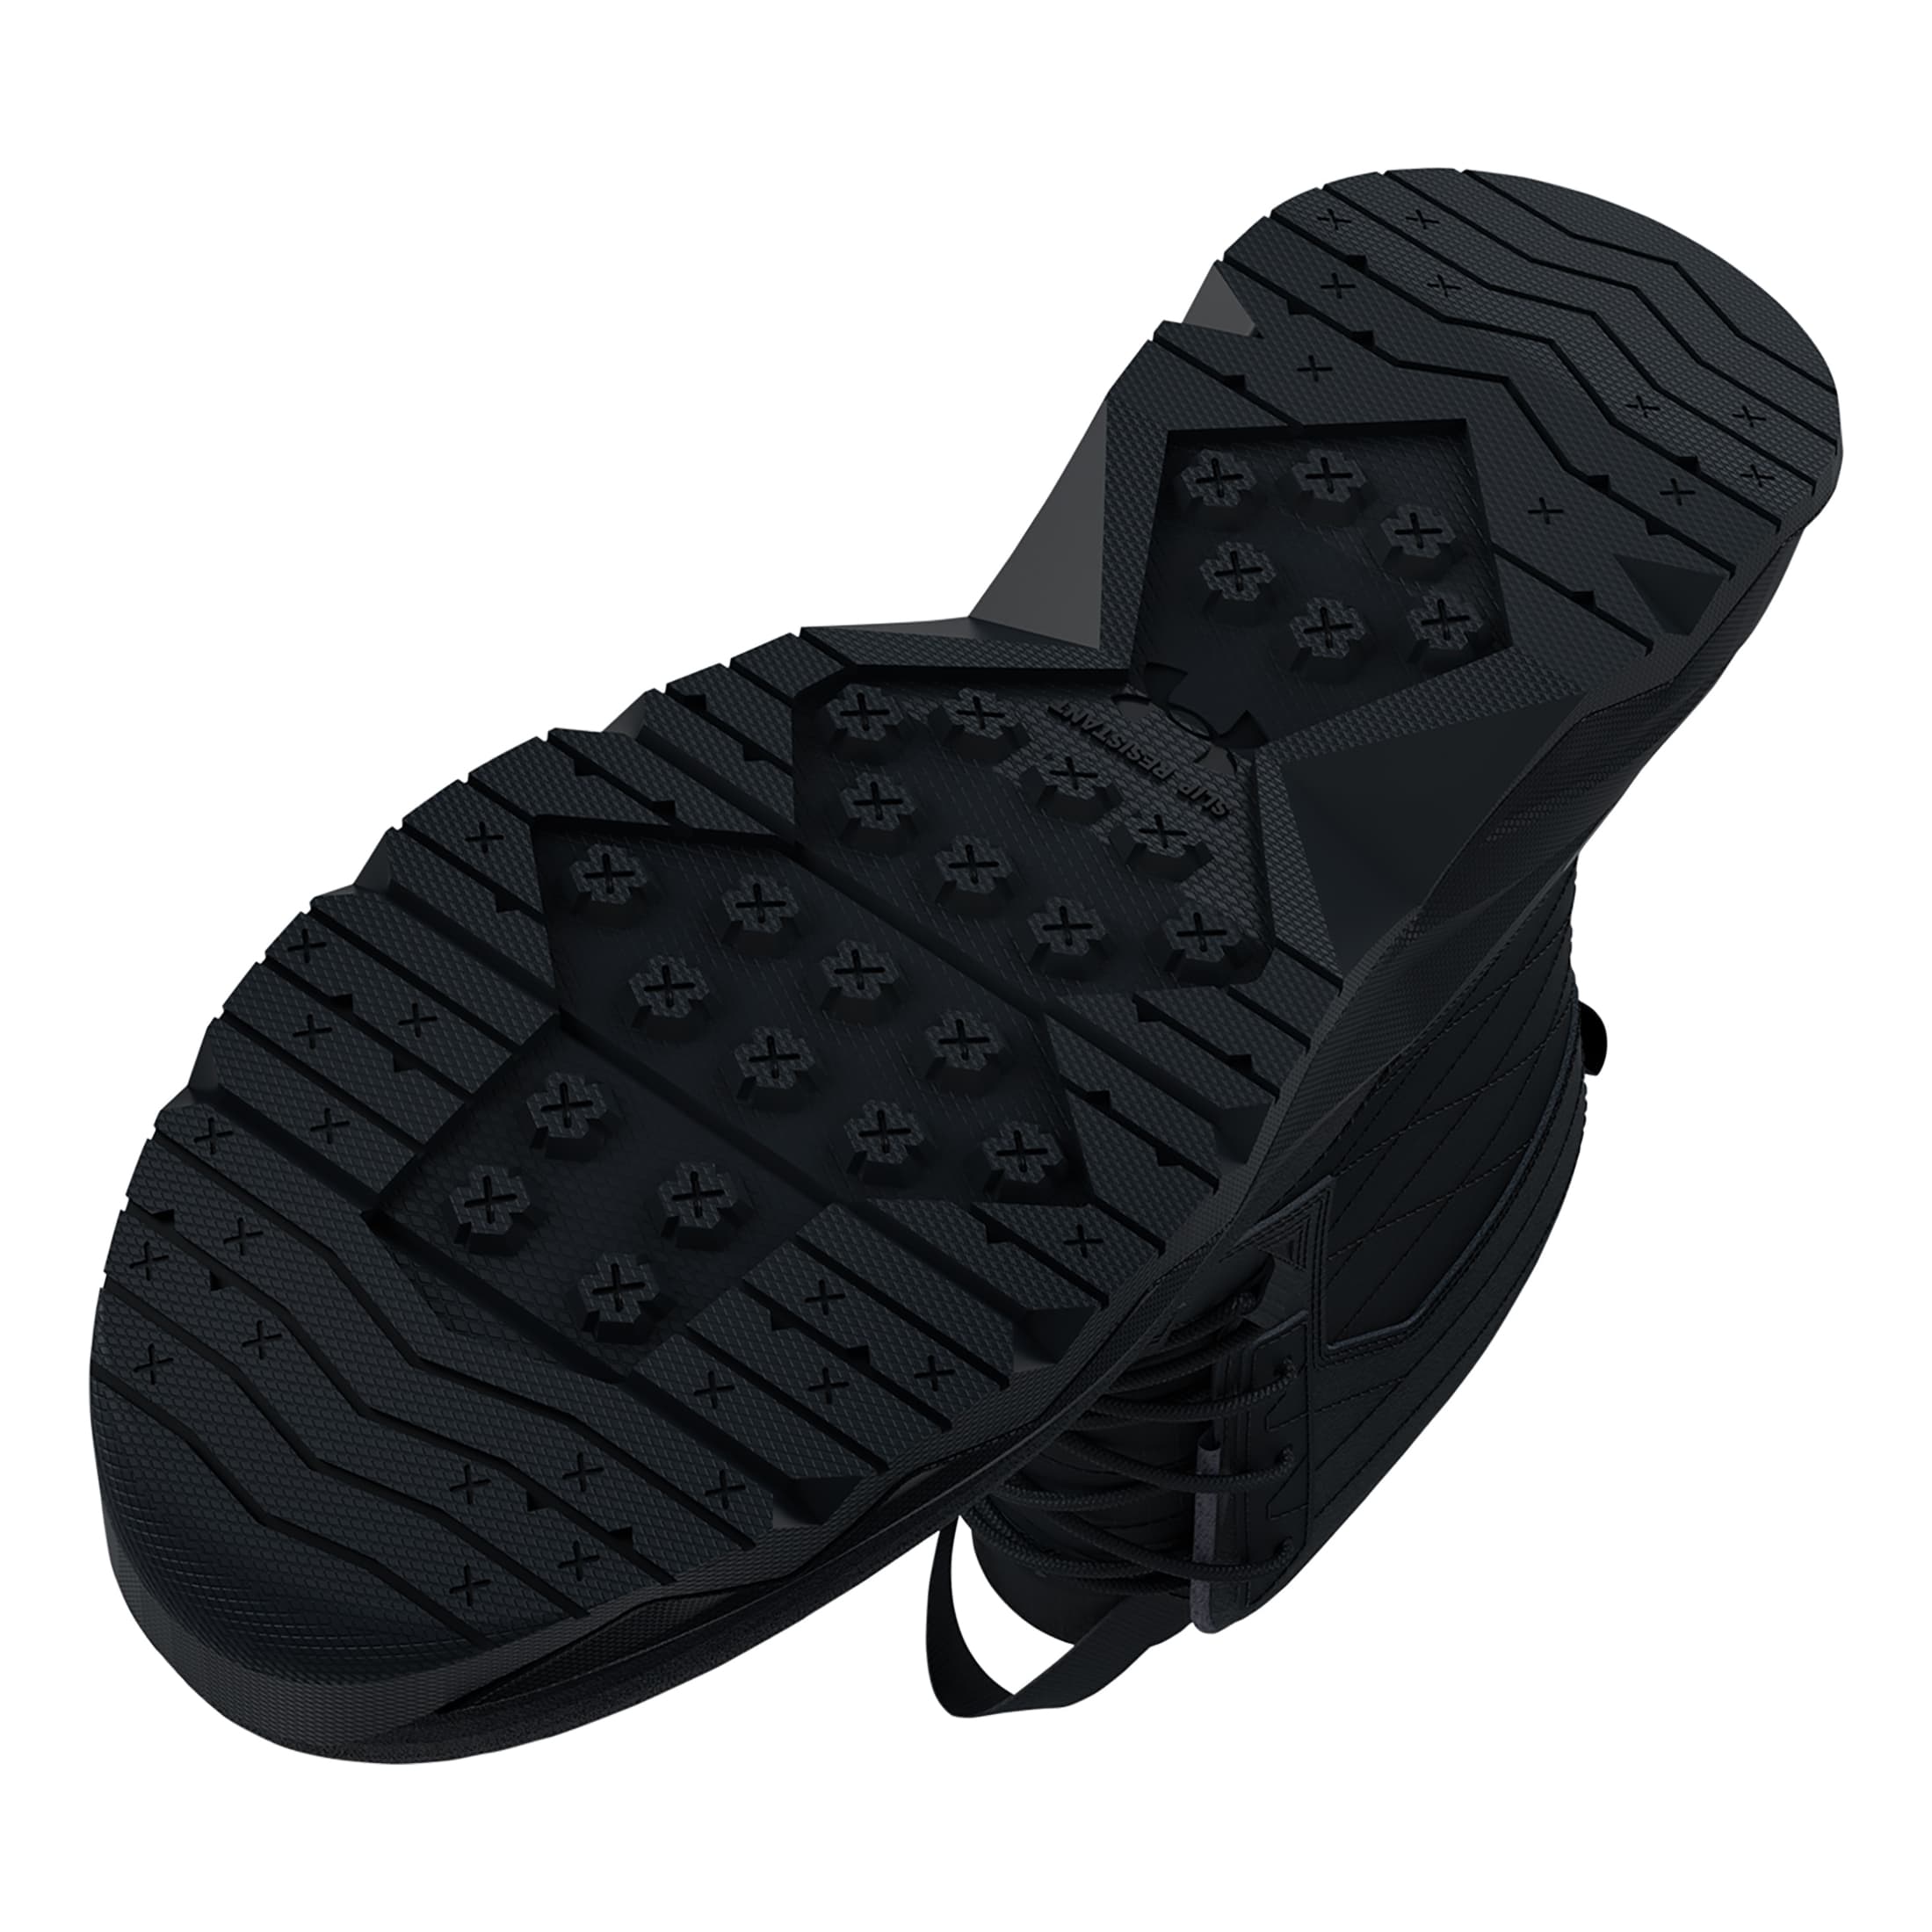 Under Armour® Women’s Stellar G2 Tactical Boots - sole